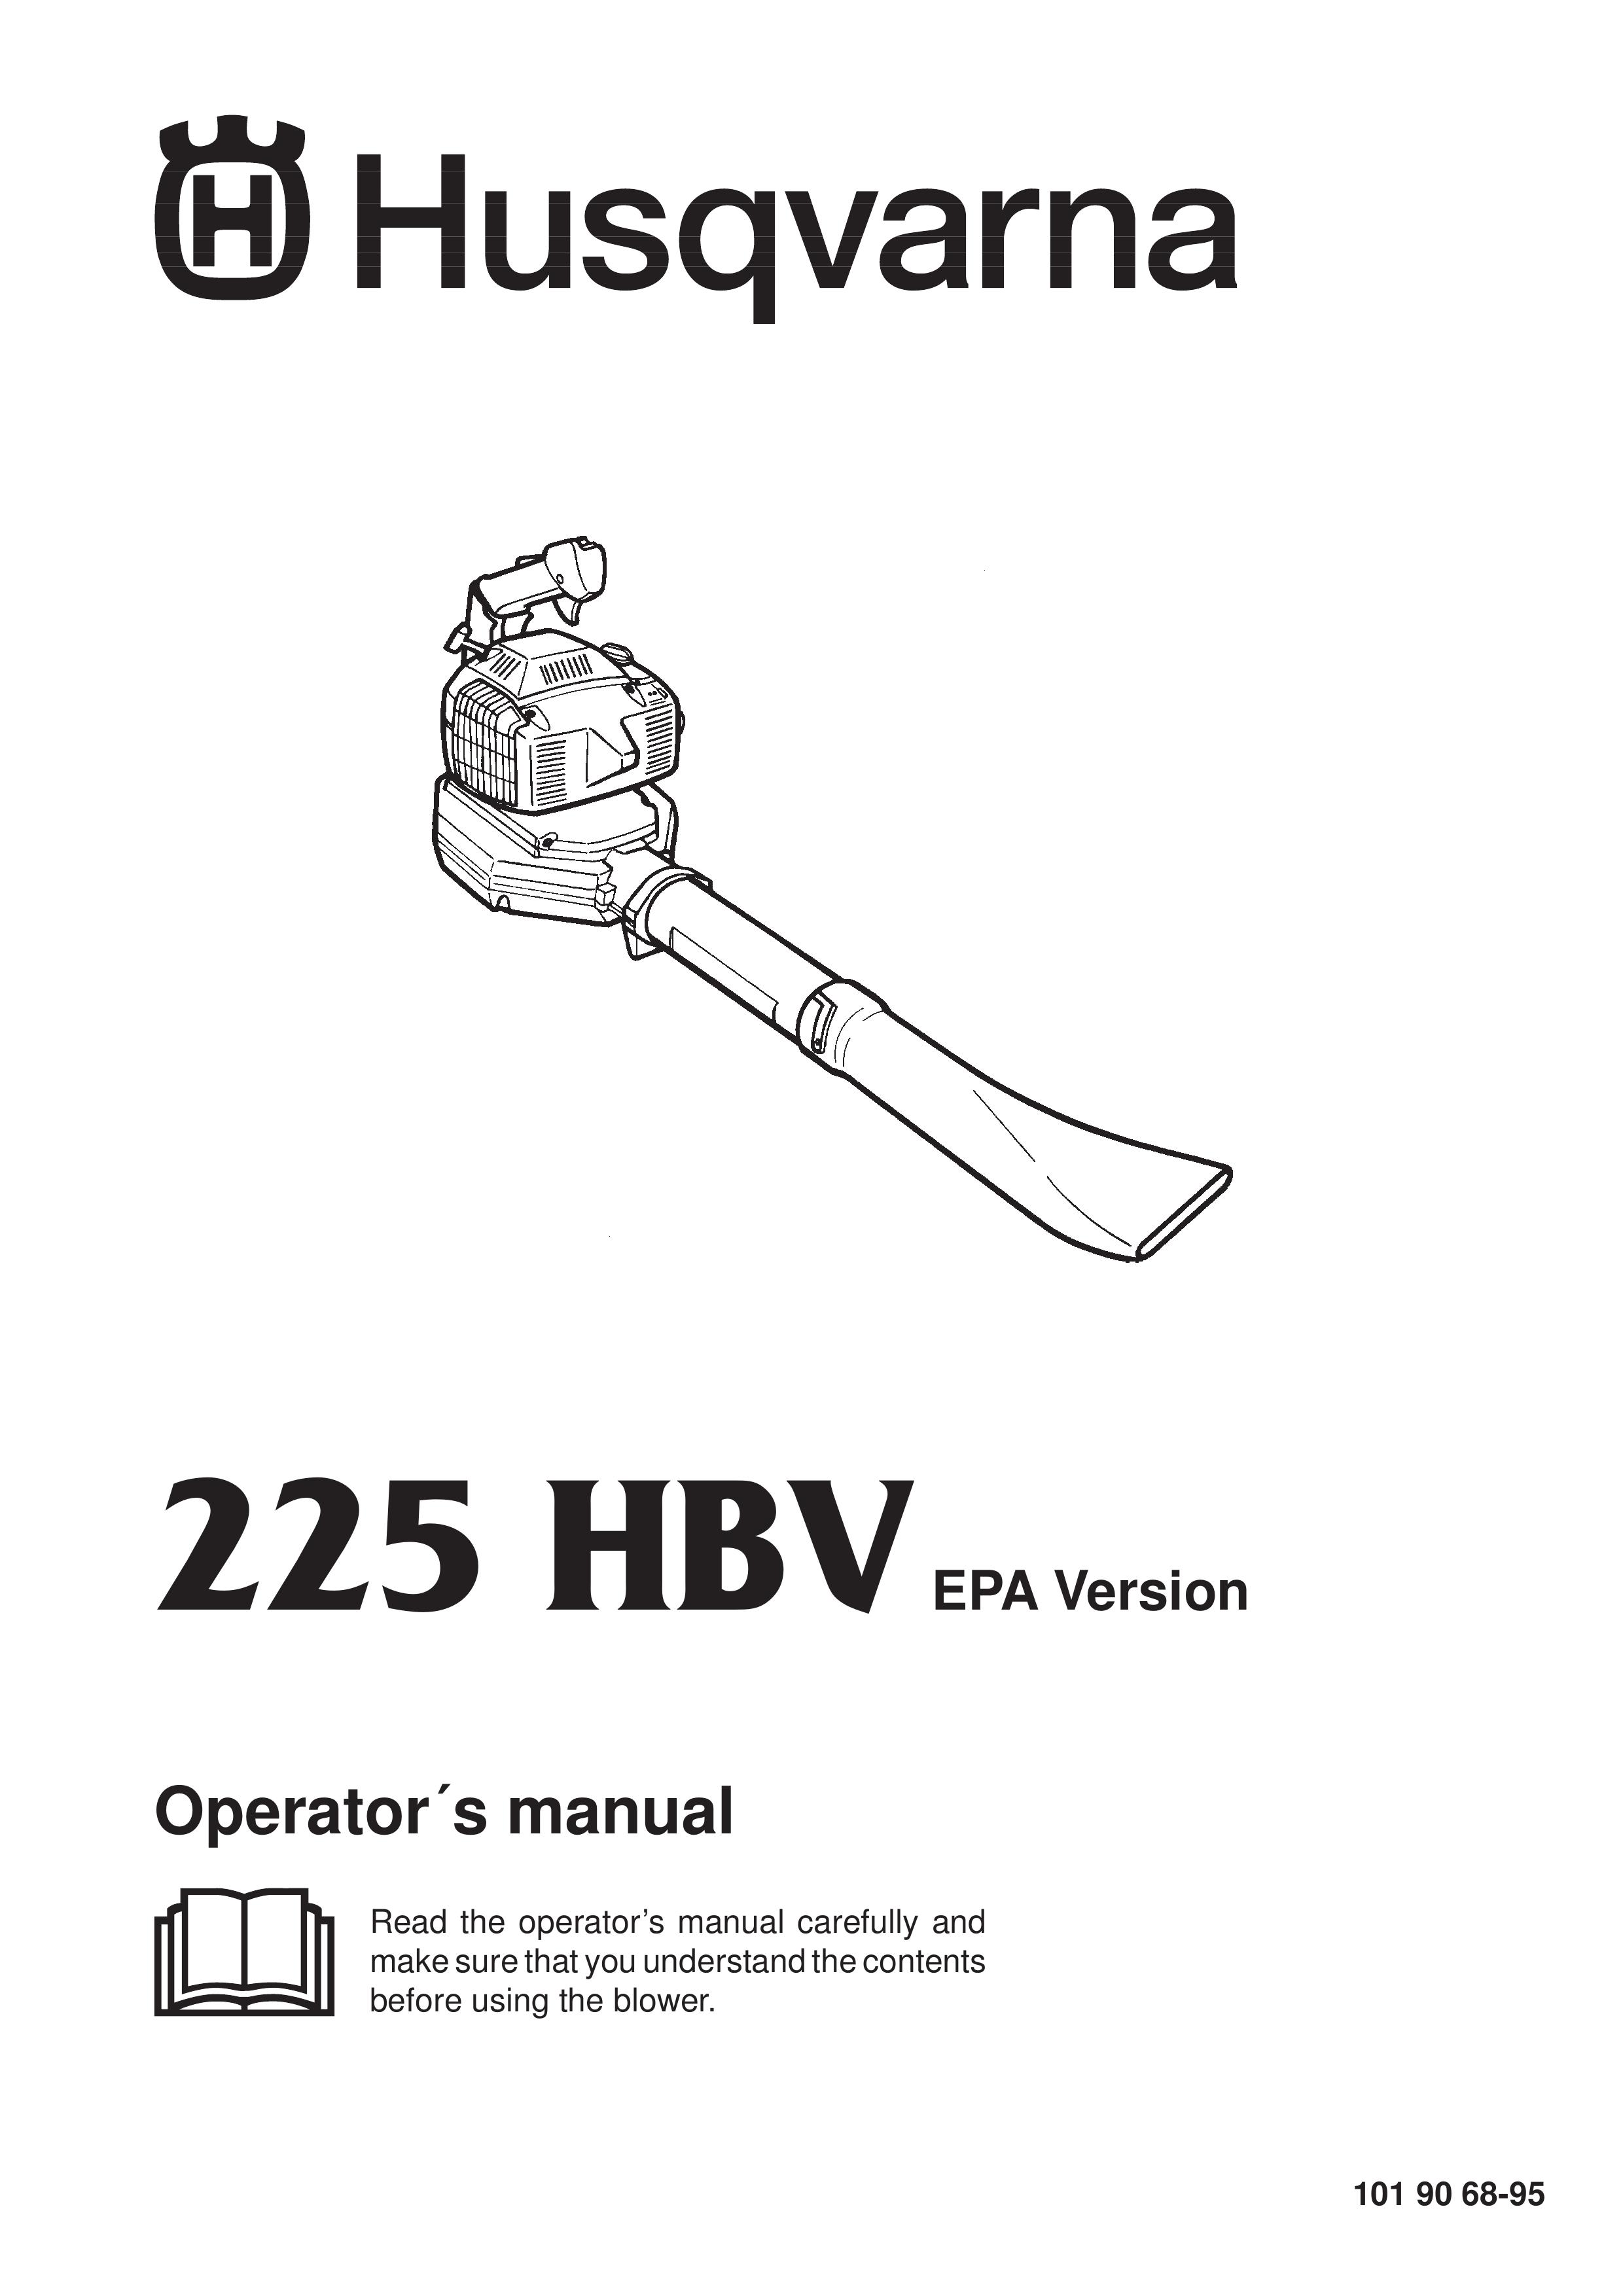 Husqvarna 225 HBV Blower User Manual